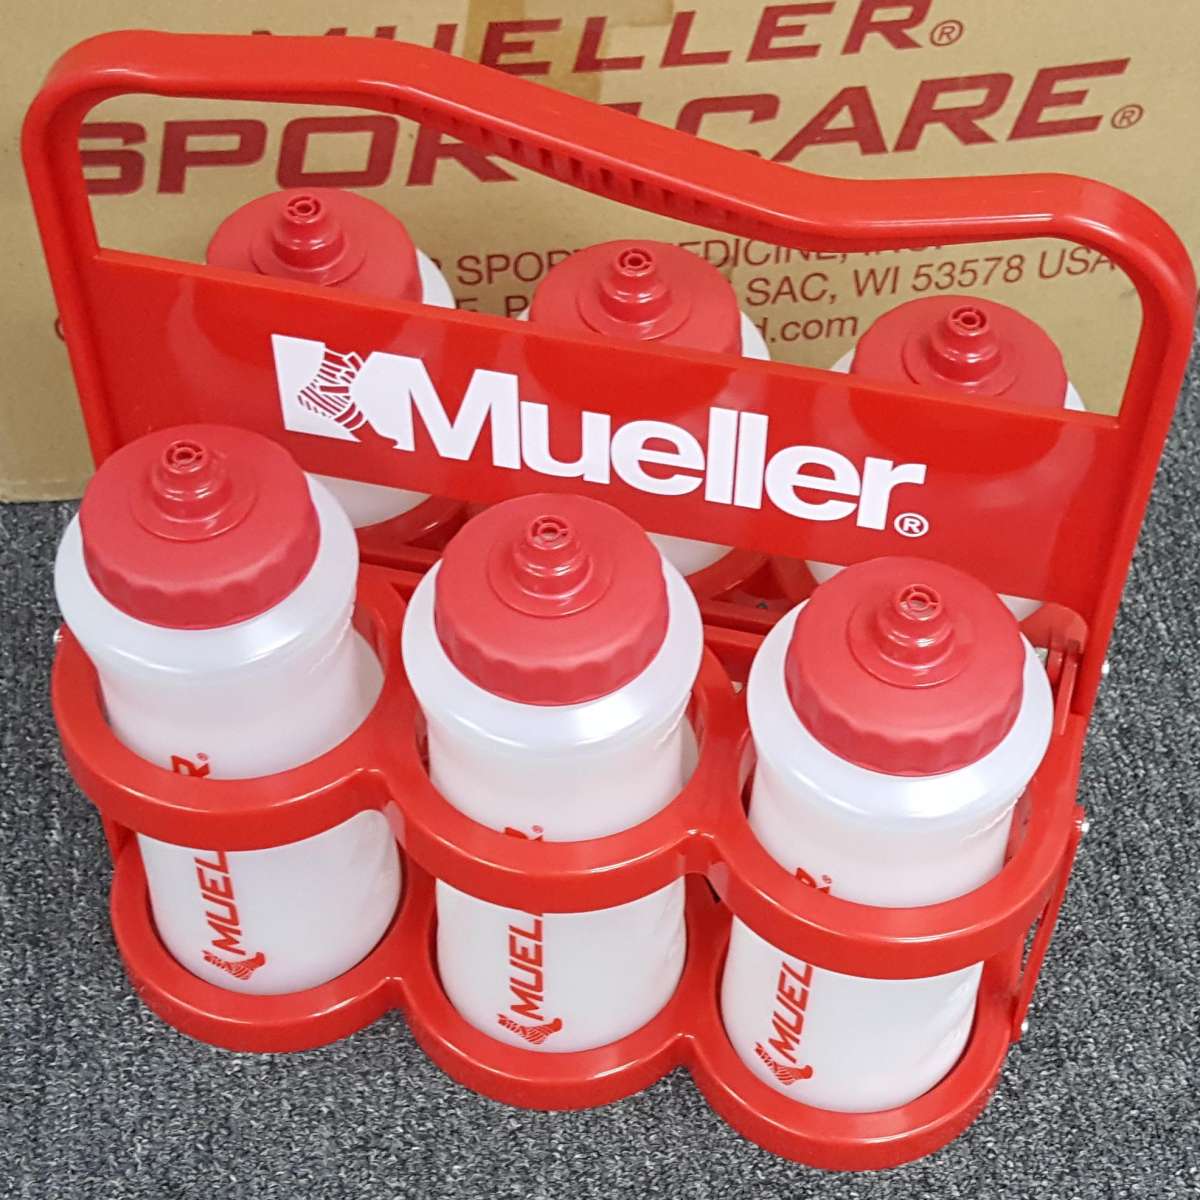 Mueller 6 Pcs Quart Water Bottle with Carrier